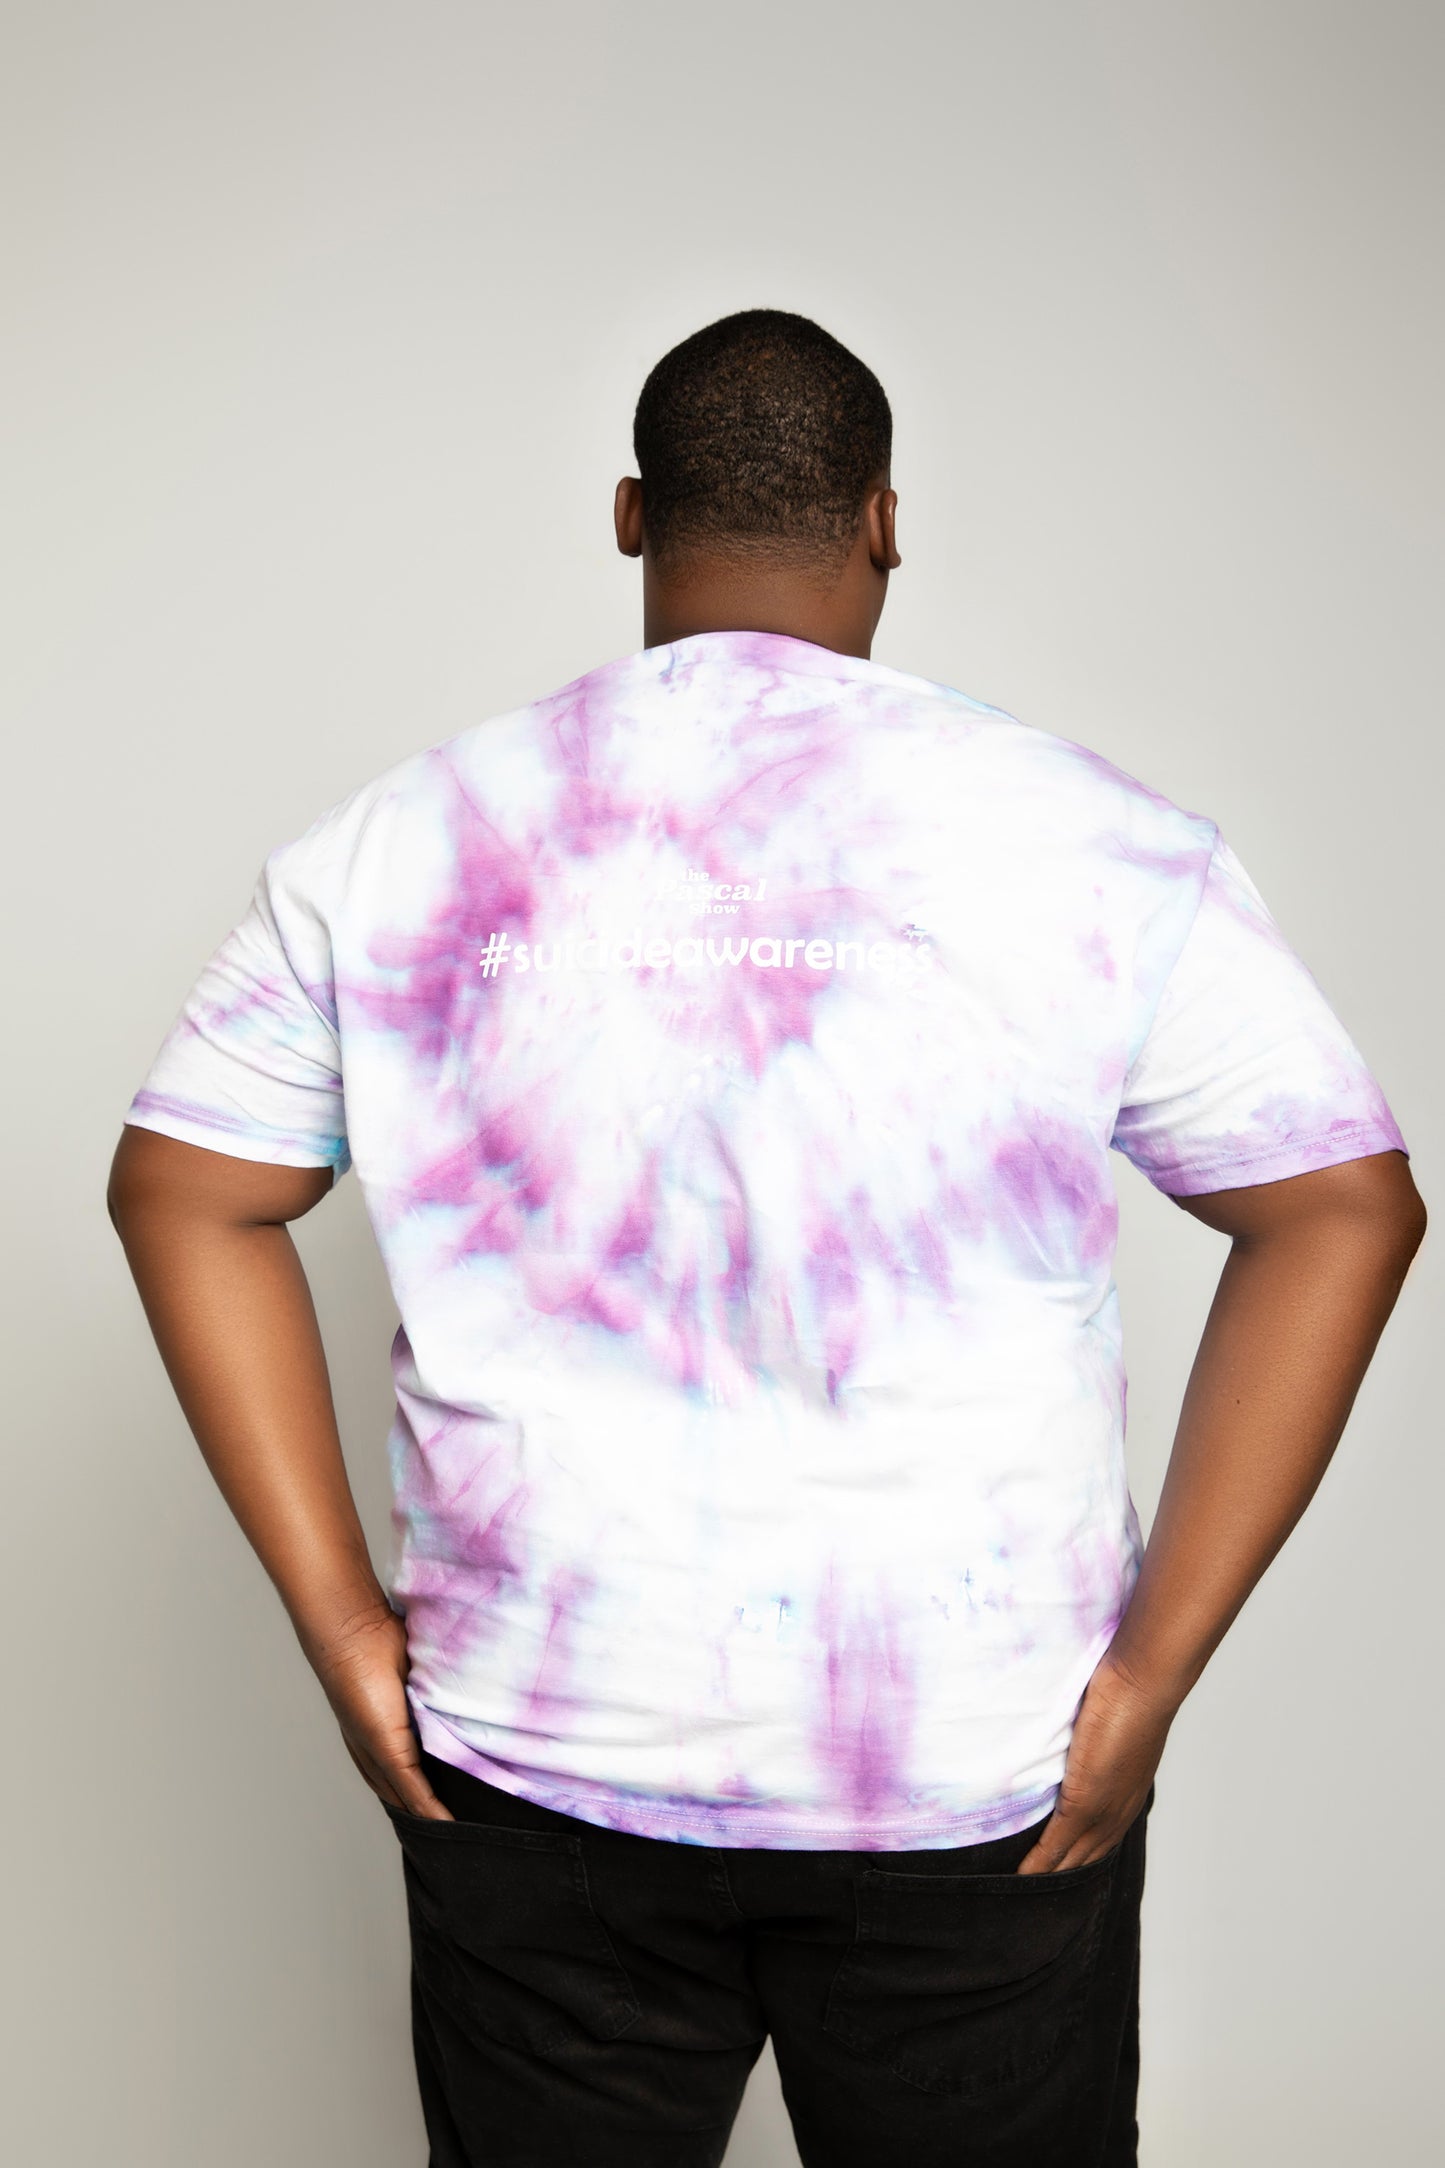 Custom Tie-Dye Suicide Awareness Tee - This Shirt Saves Lives